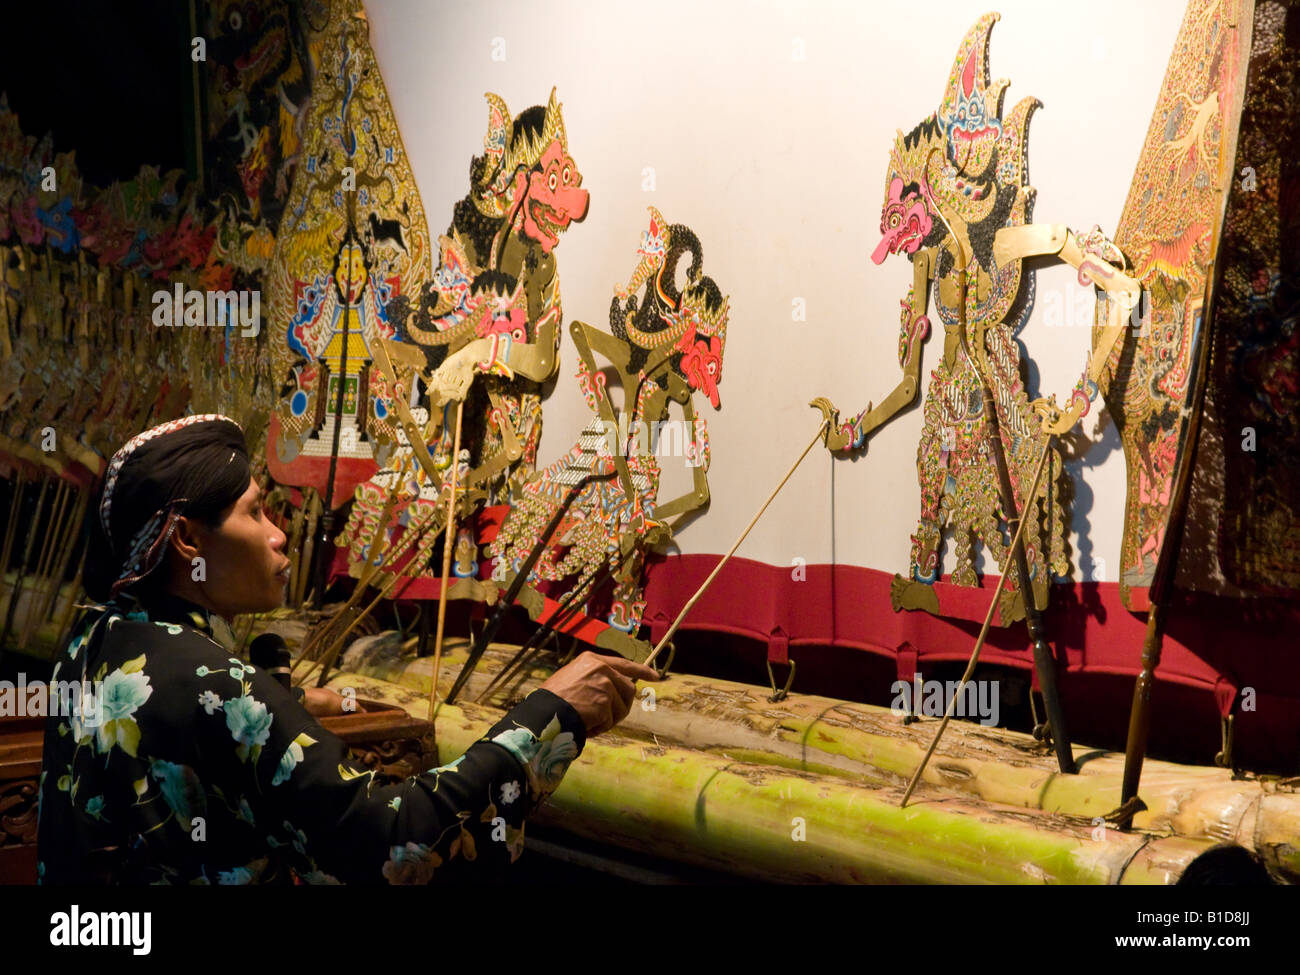 Indonesia Java Island Yogyakarta Sonobudoyo Museum Wayang Kulit Puppet shadow play Stock Photo